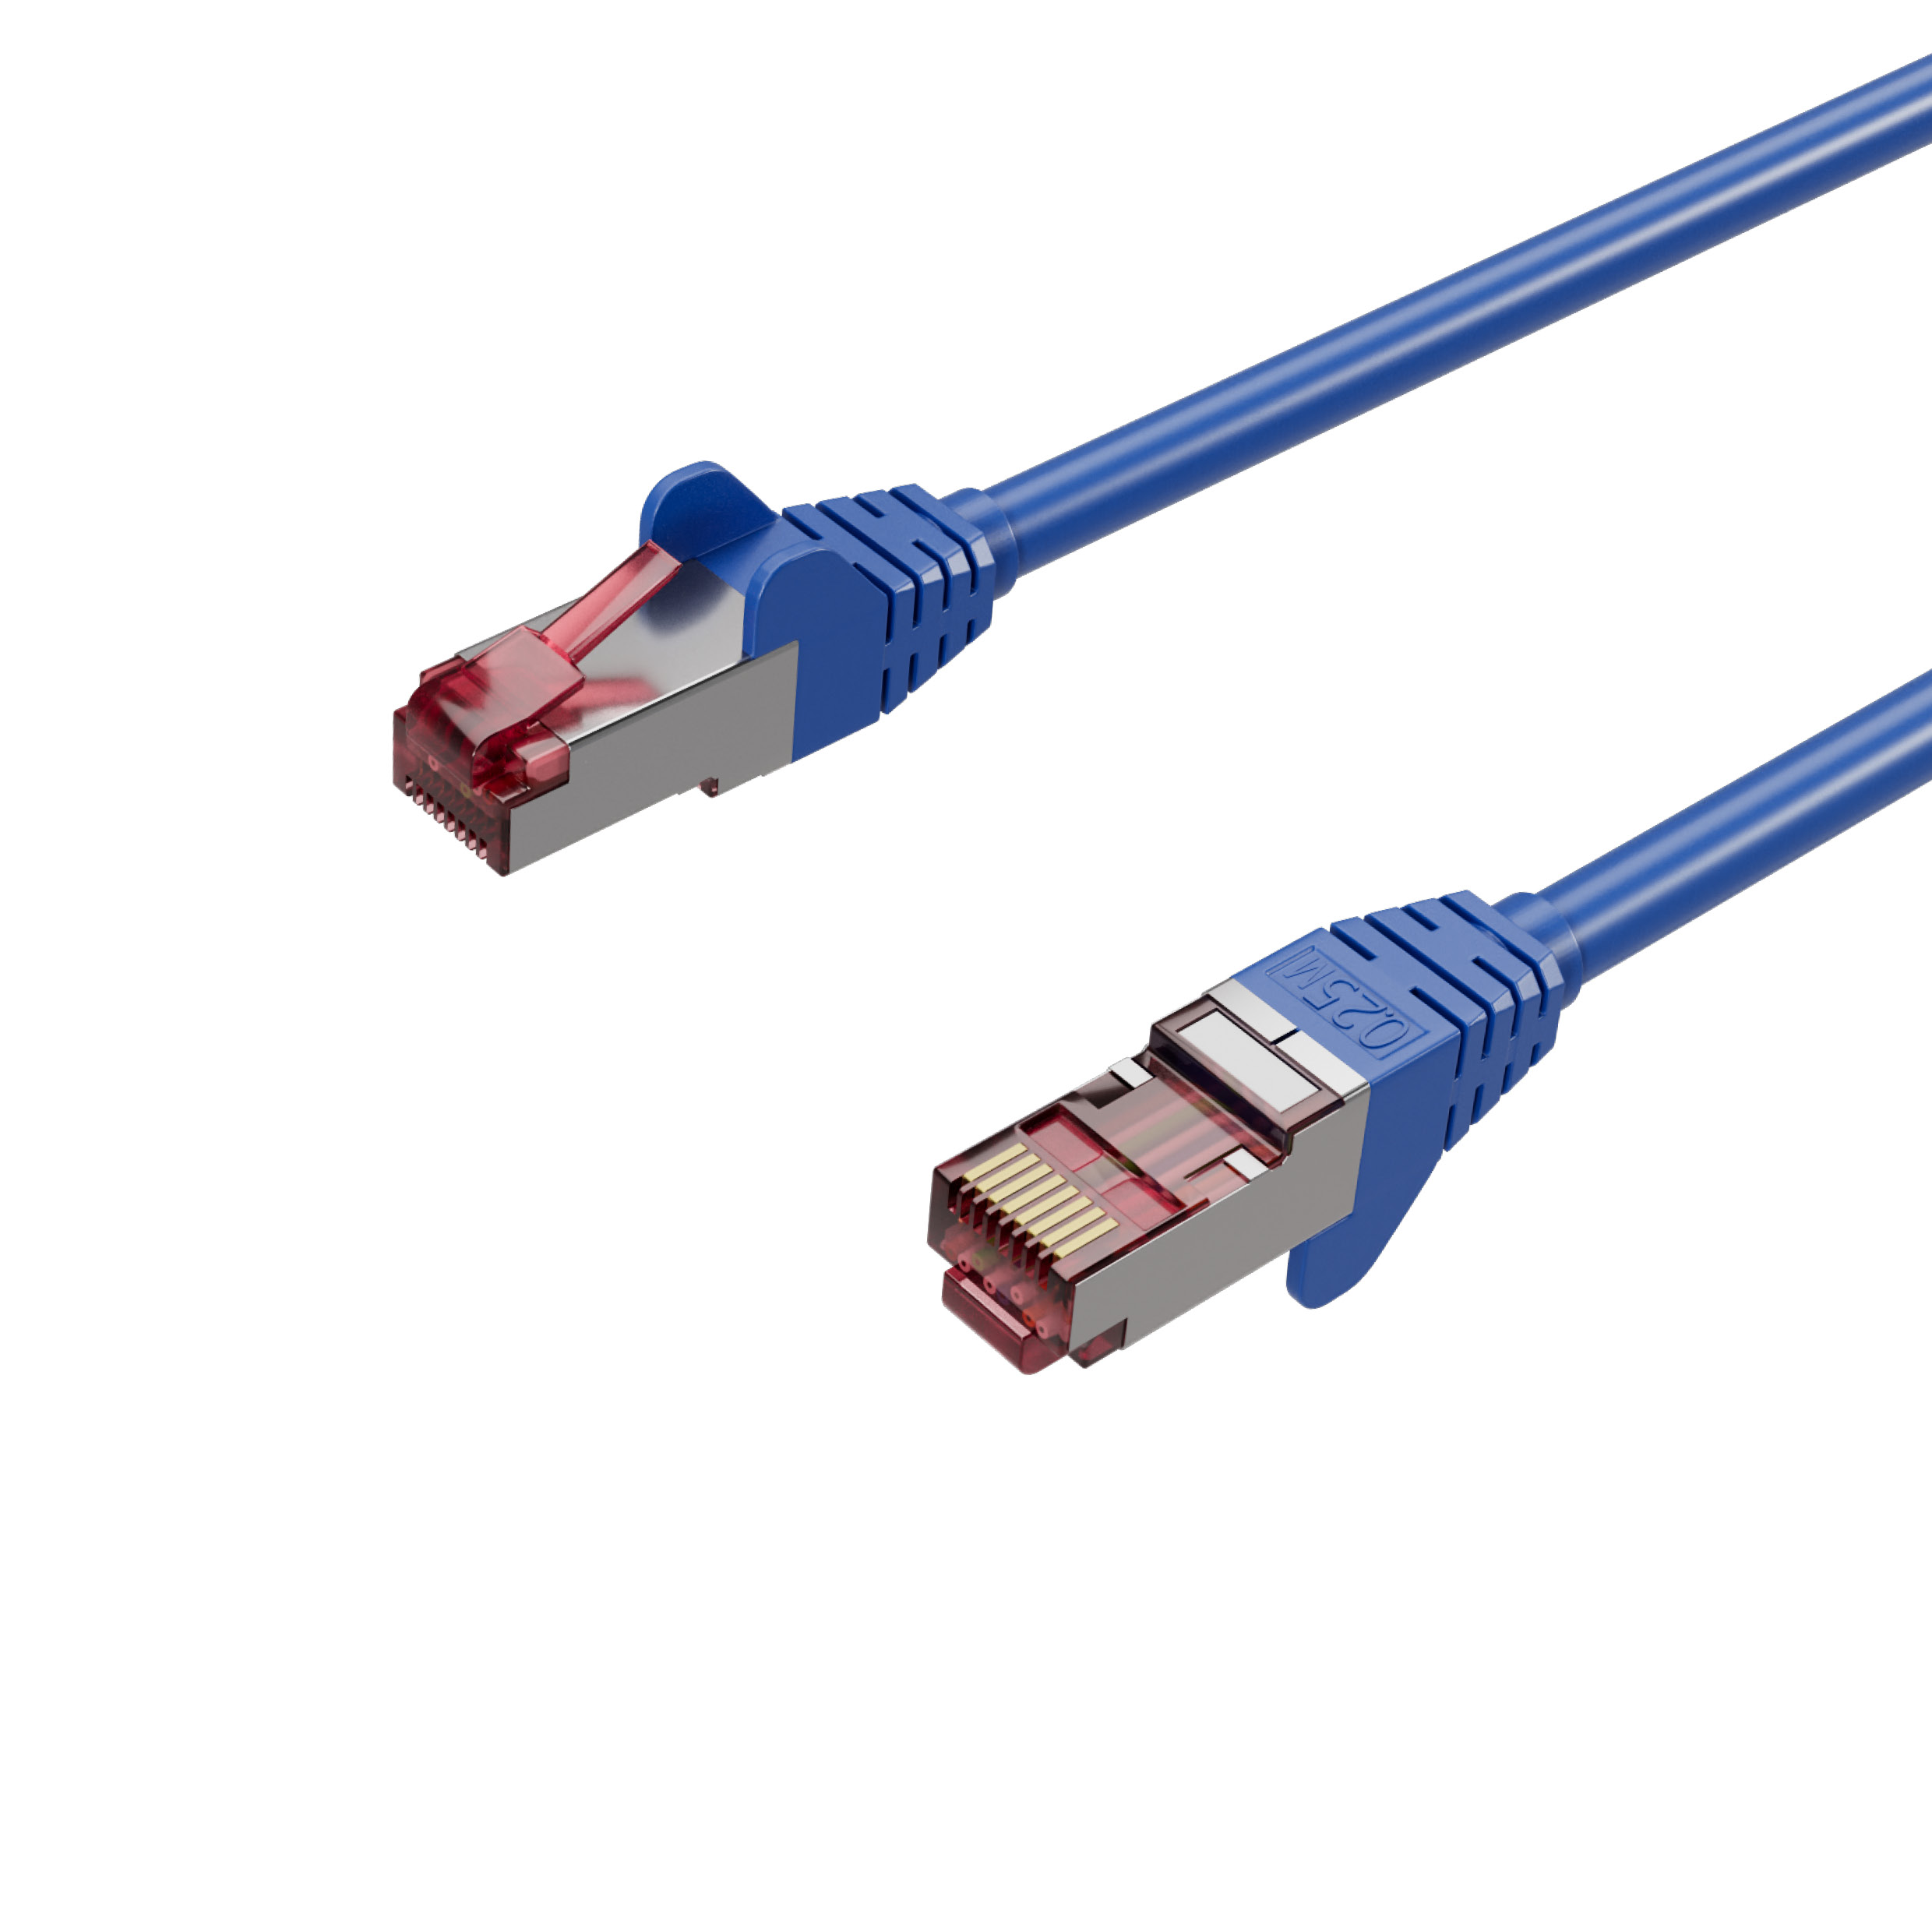 KABELBUDE Netzwerkkabel, RJ45 LAN, PIMF, GHMT Halogenfrei, Ethernet 7,50 S/FTP, Netzwerkkabel Cat 6A, 6A, m Blau 7,50m, Cat